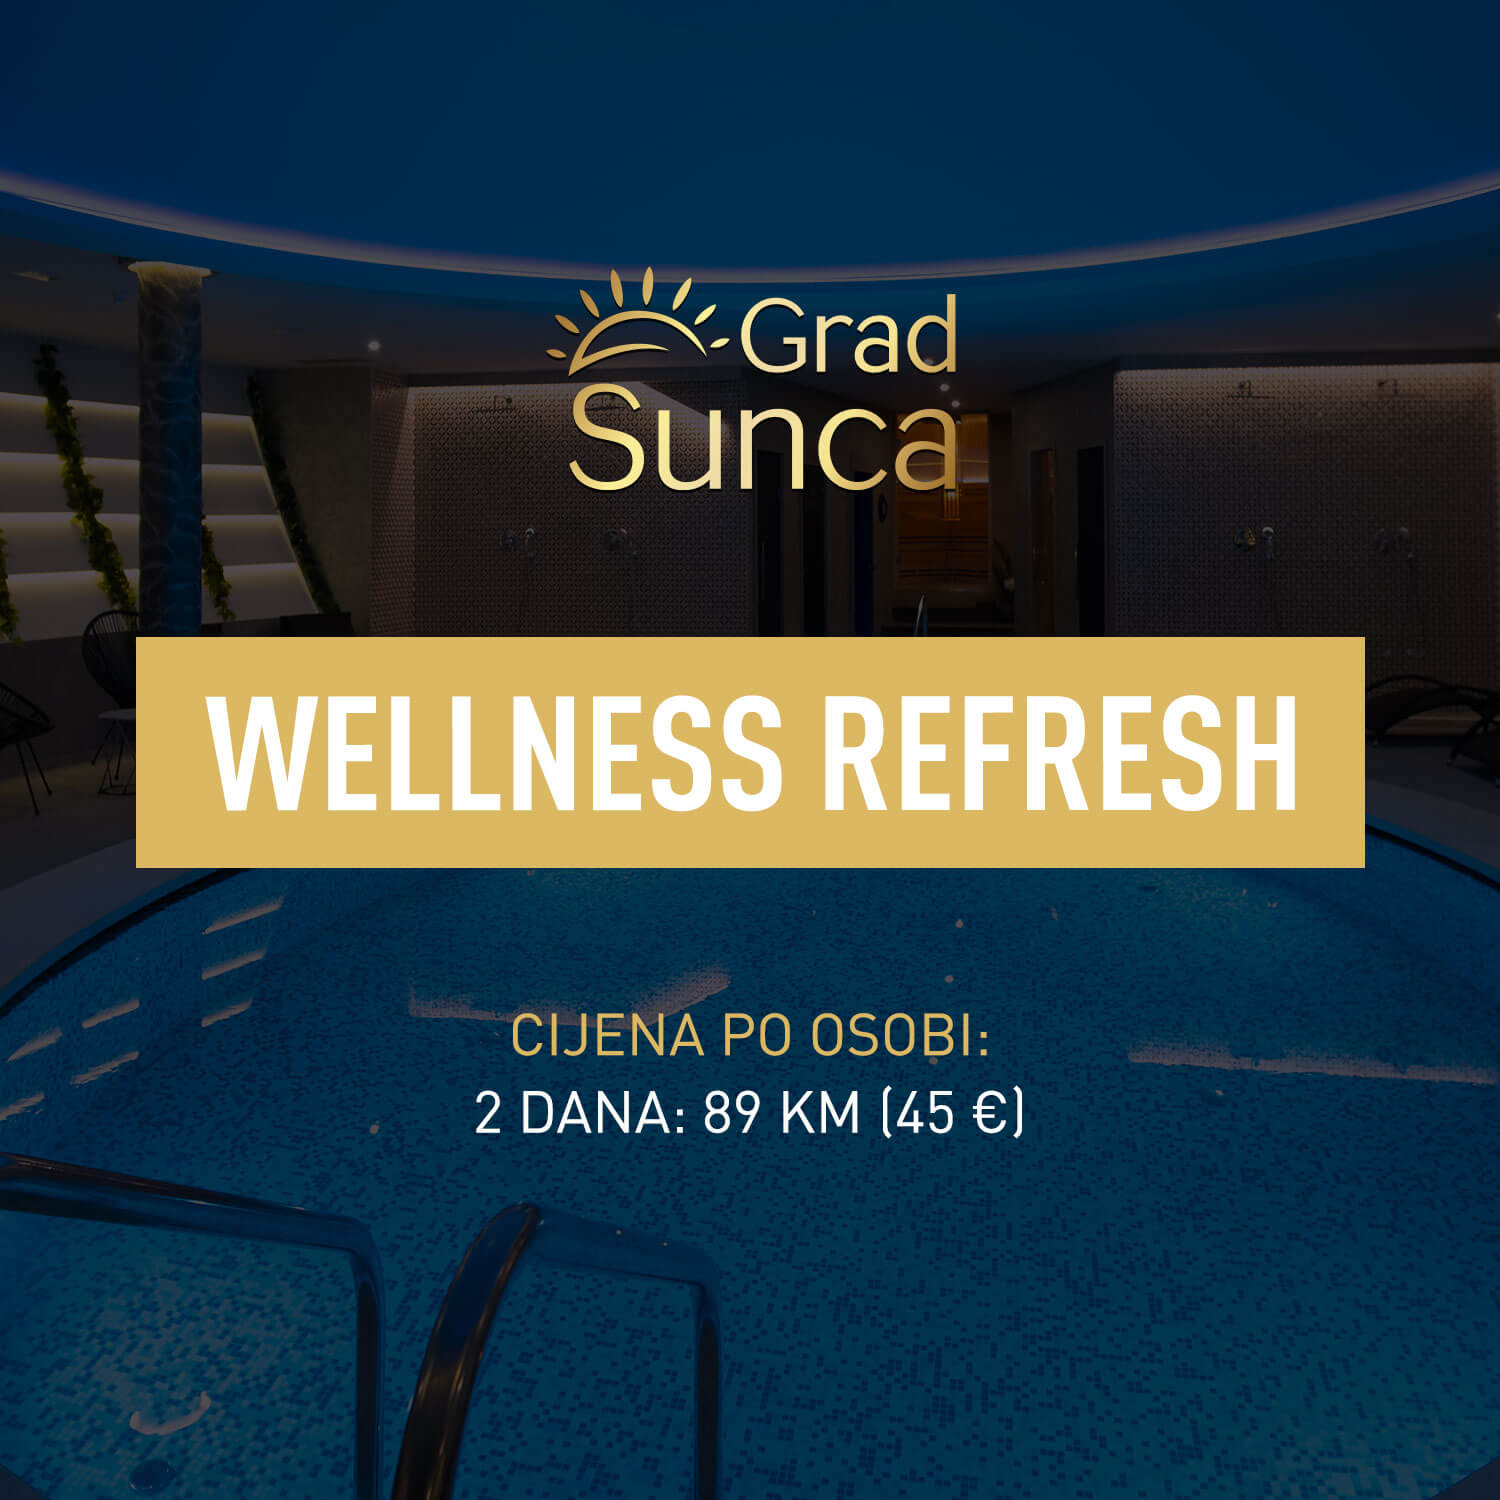 Grad sunca - Wellness refresh